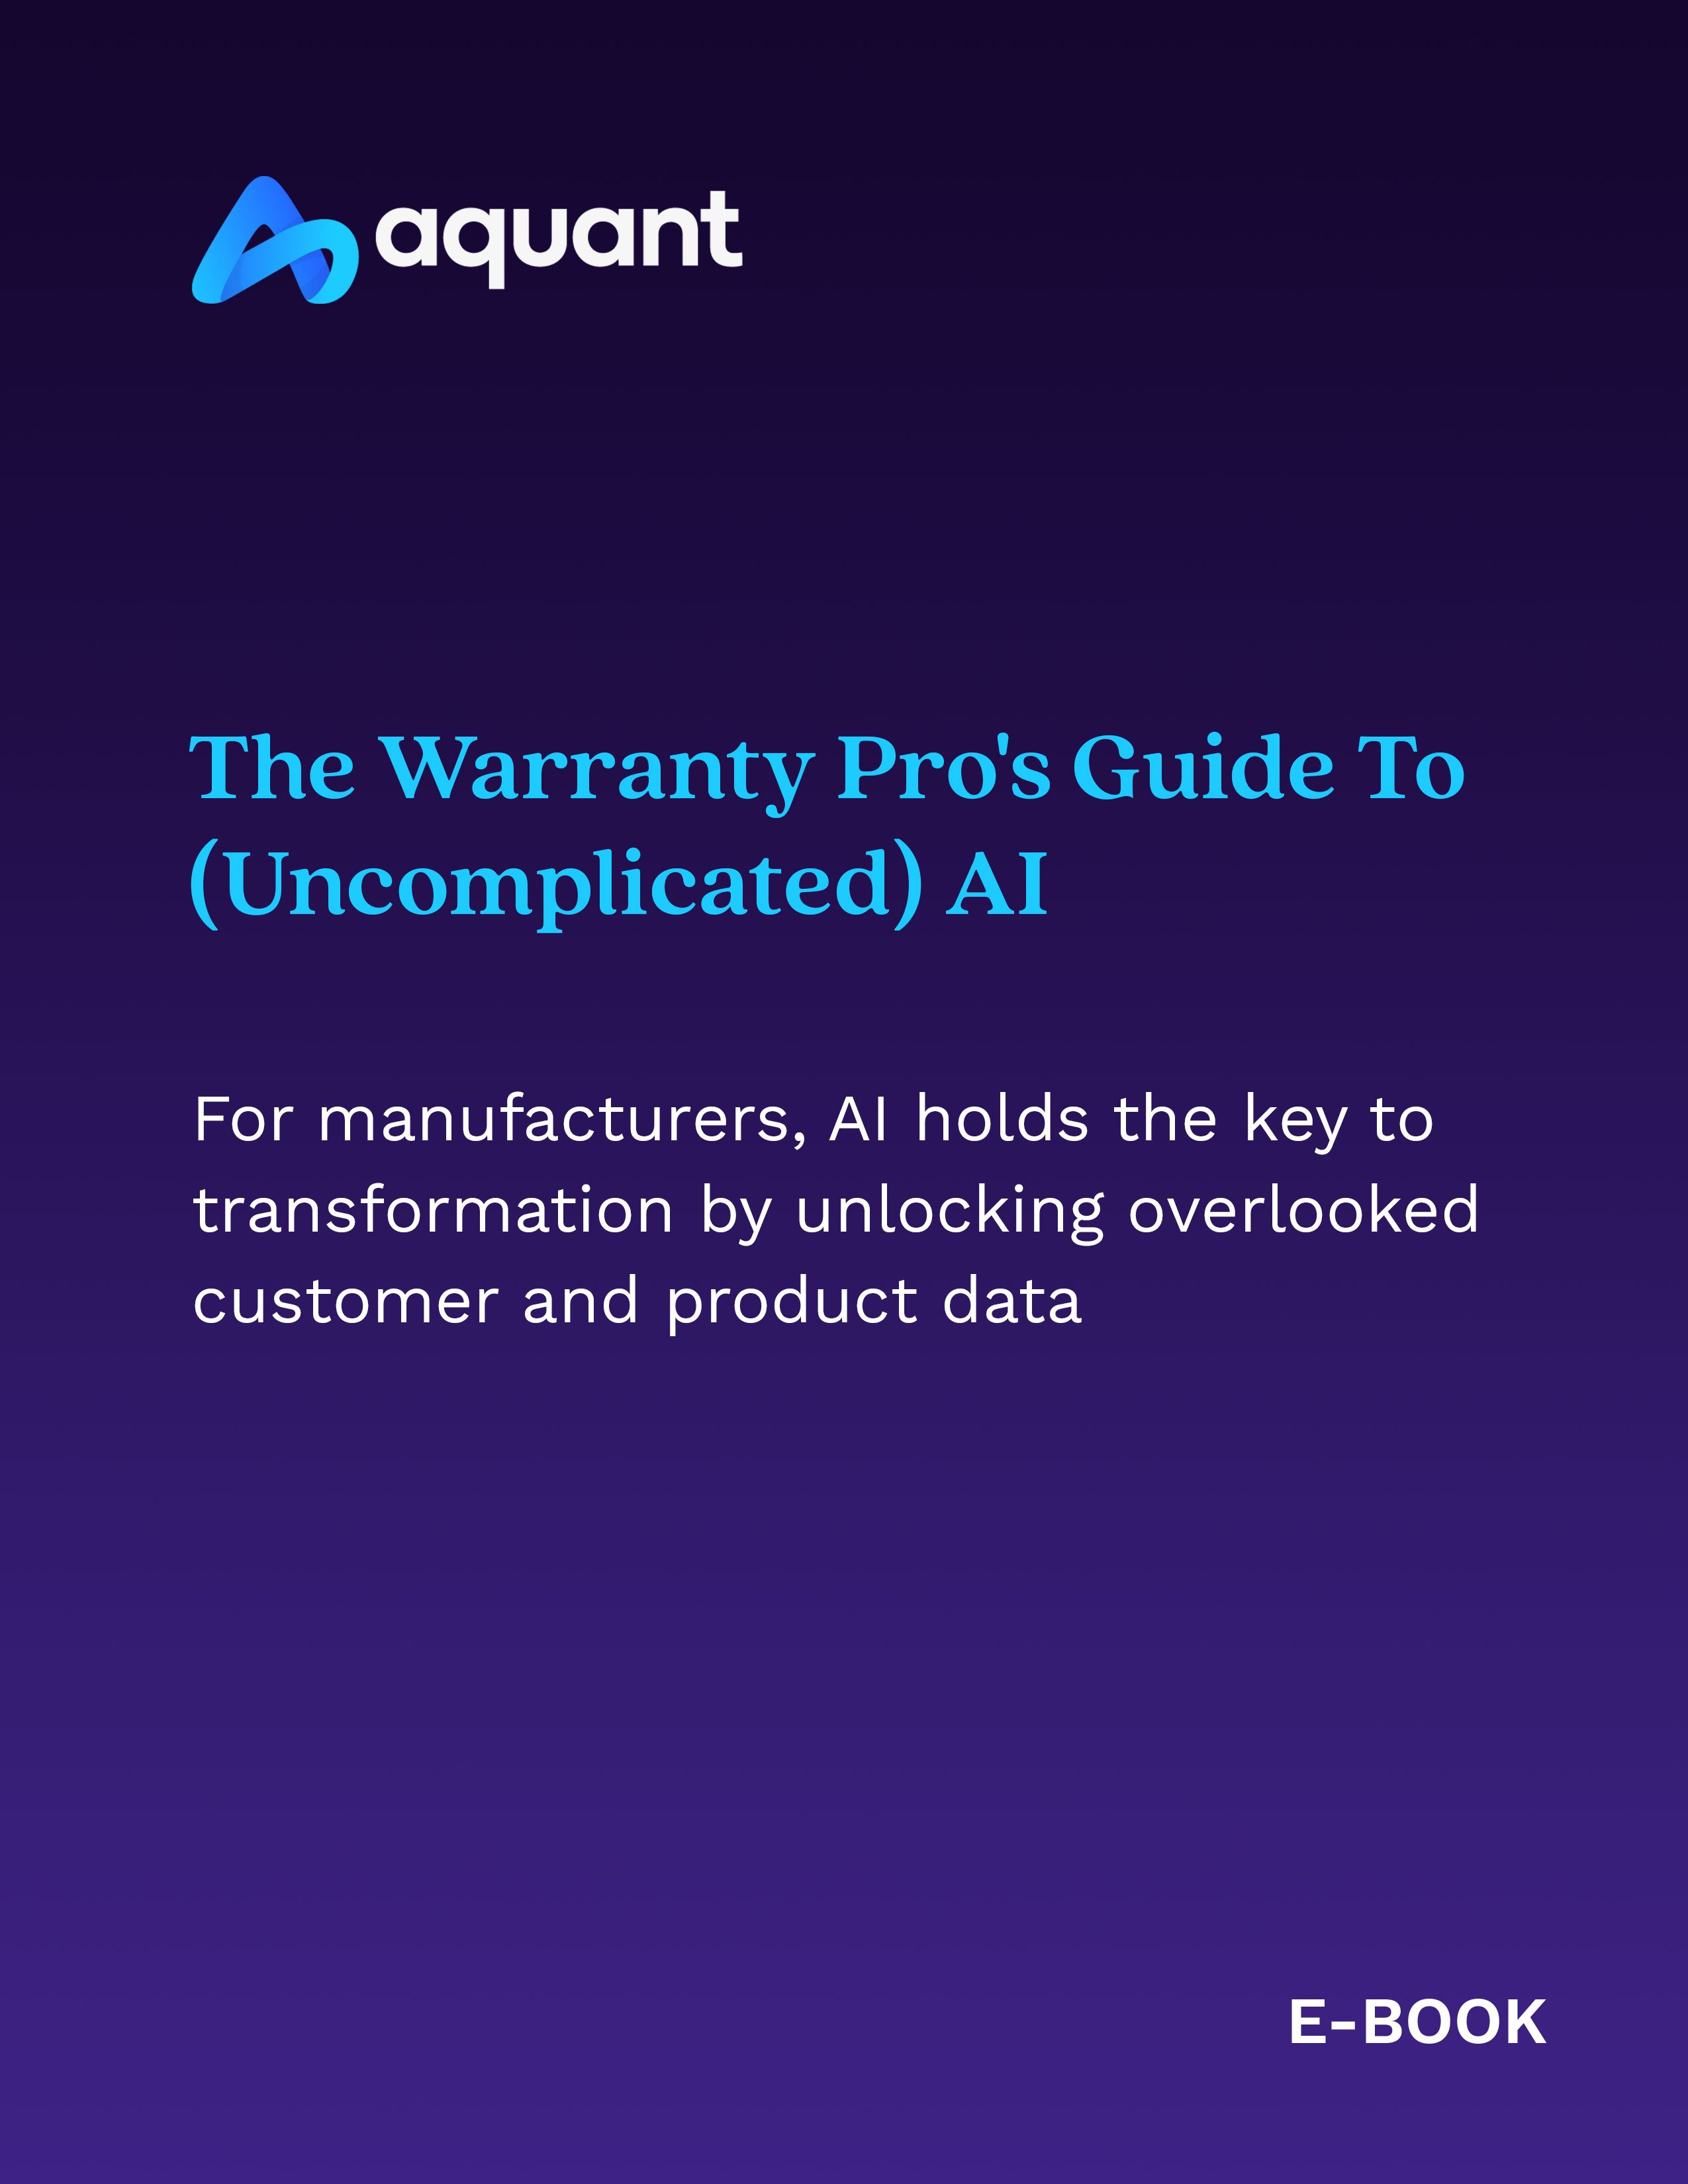 E-Books-_Warranty-Pros-Guide-To-AI-thumbnail